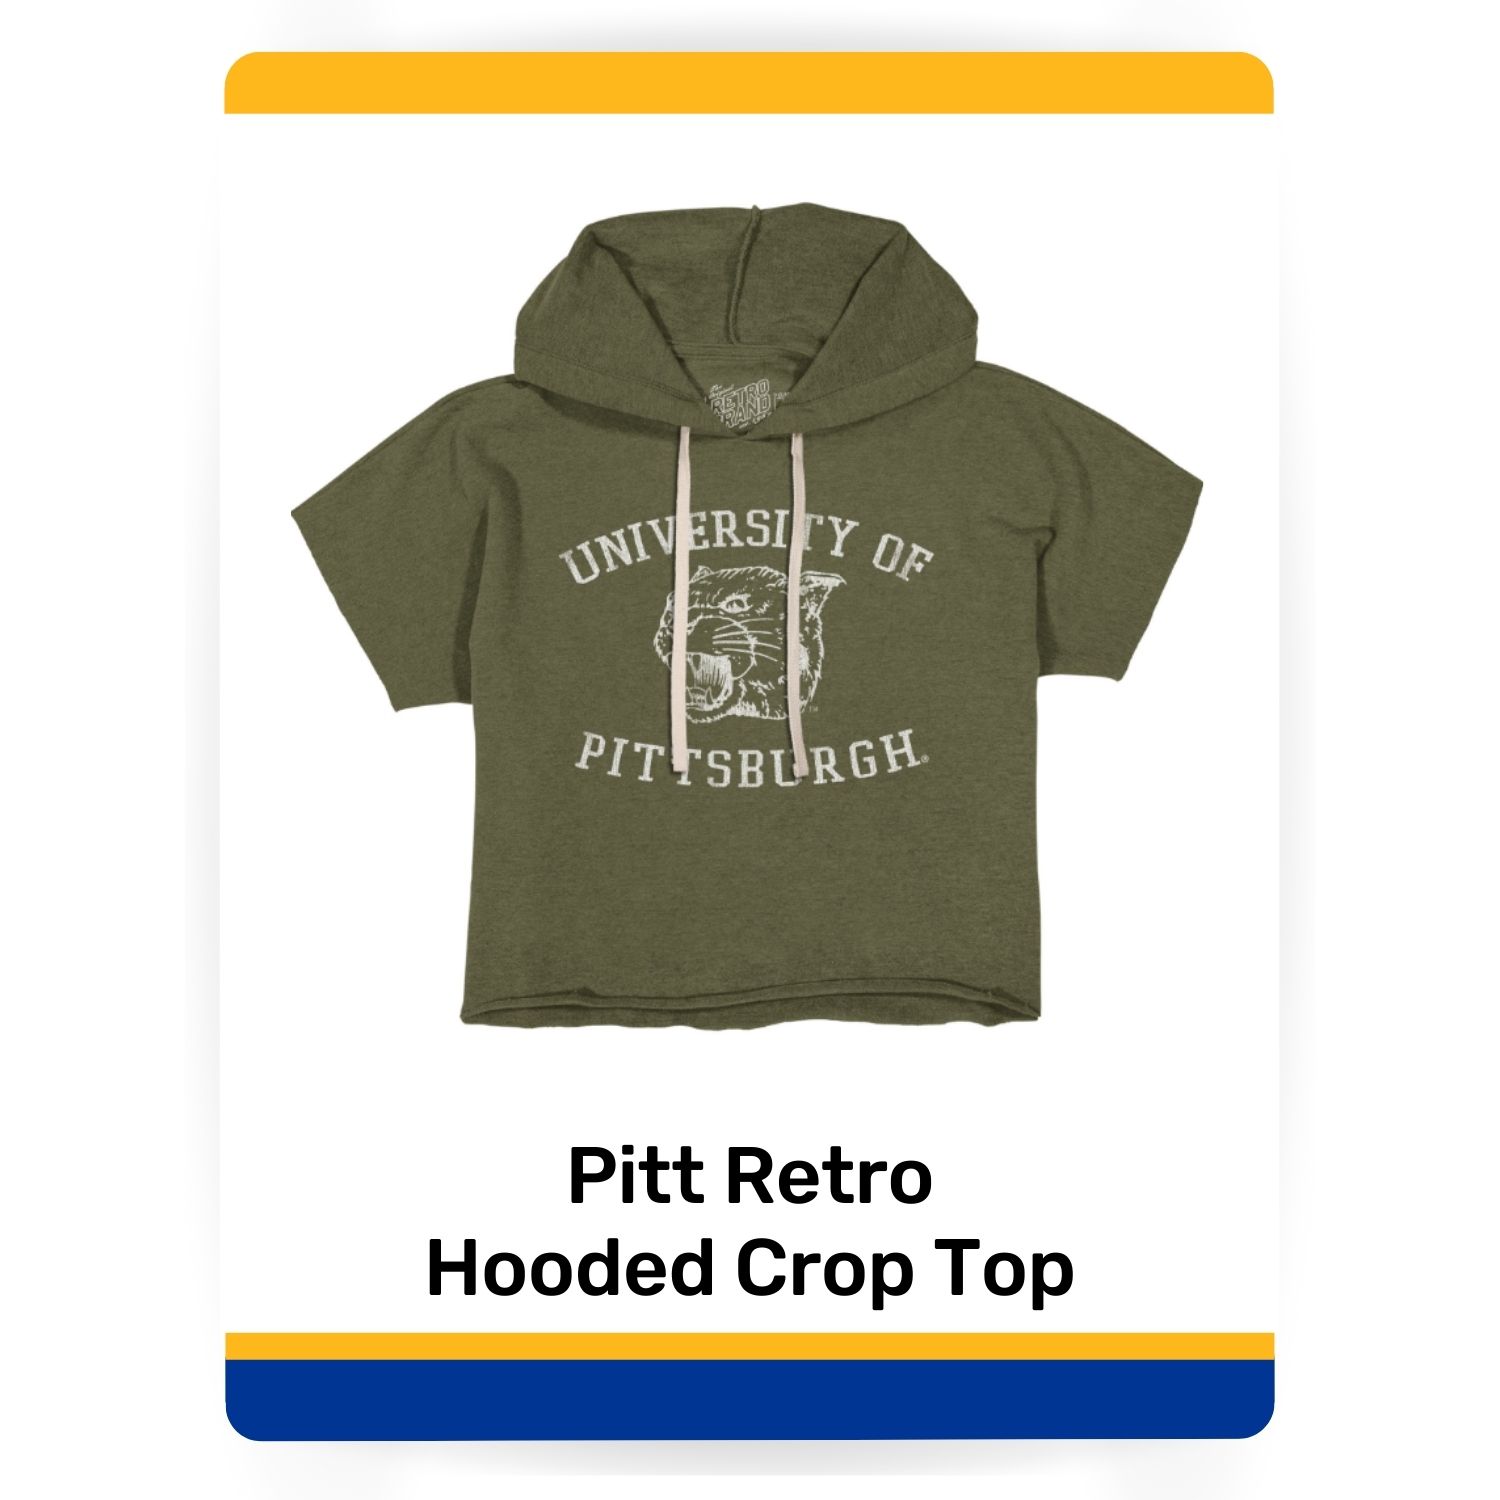 Pitt Retro Hooded Crop Top